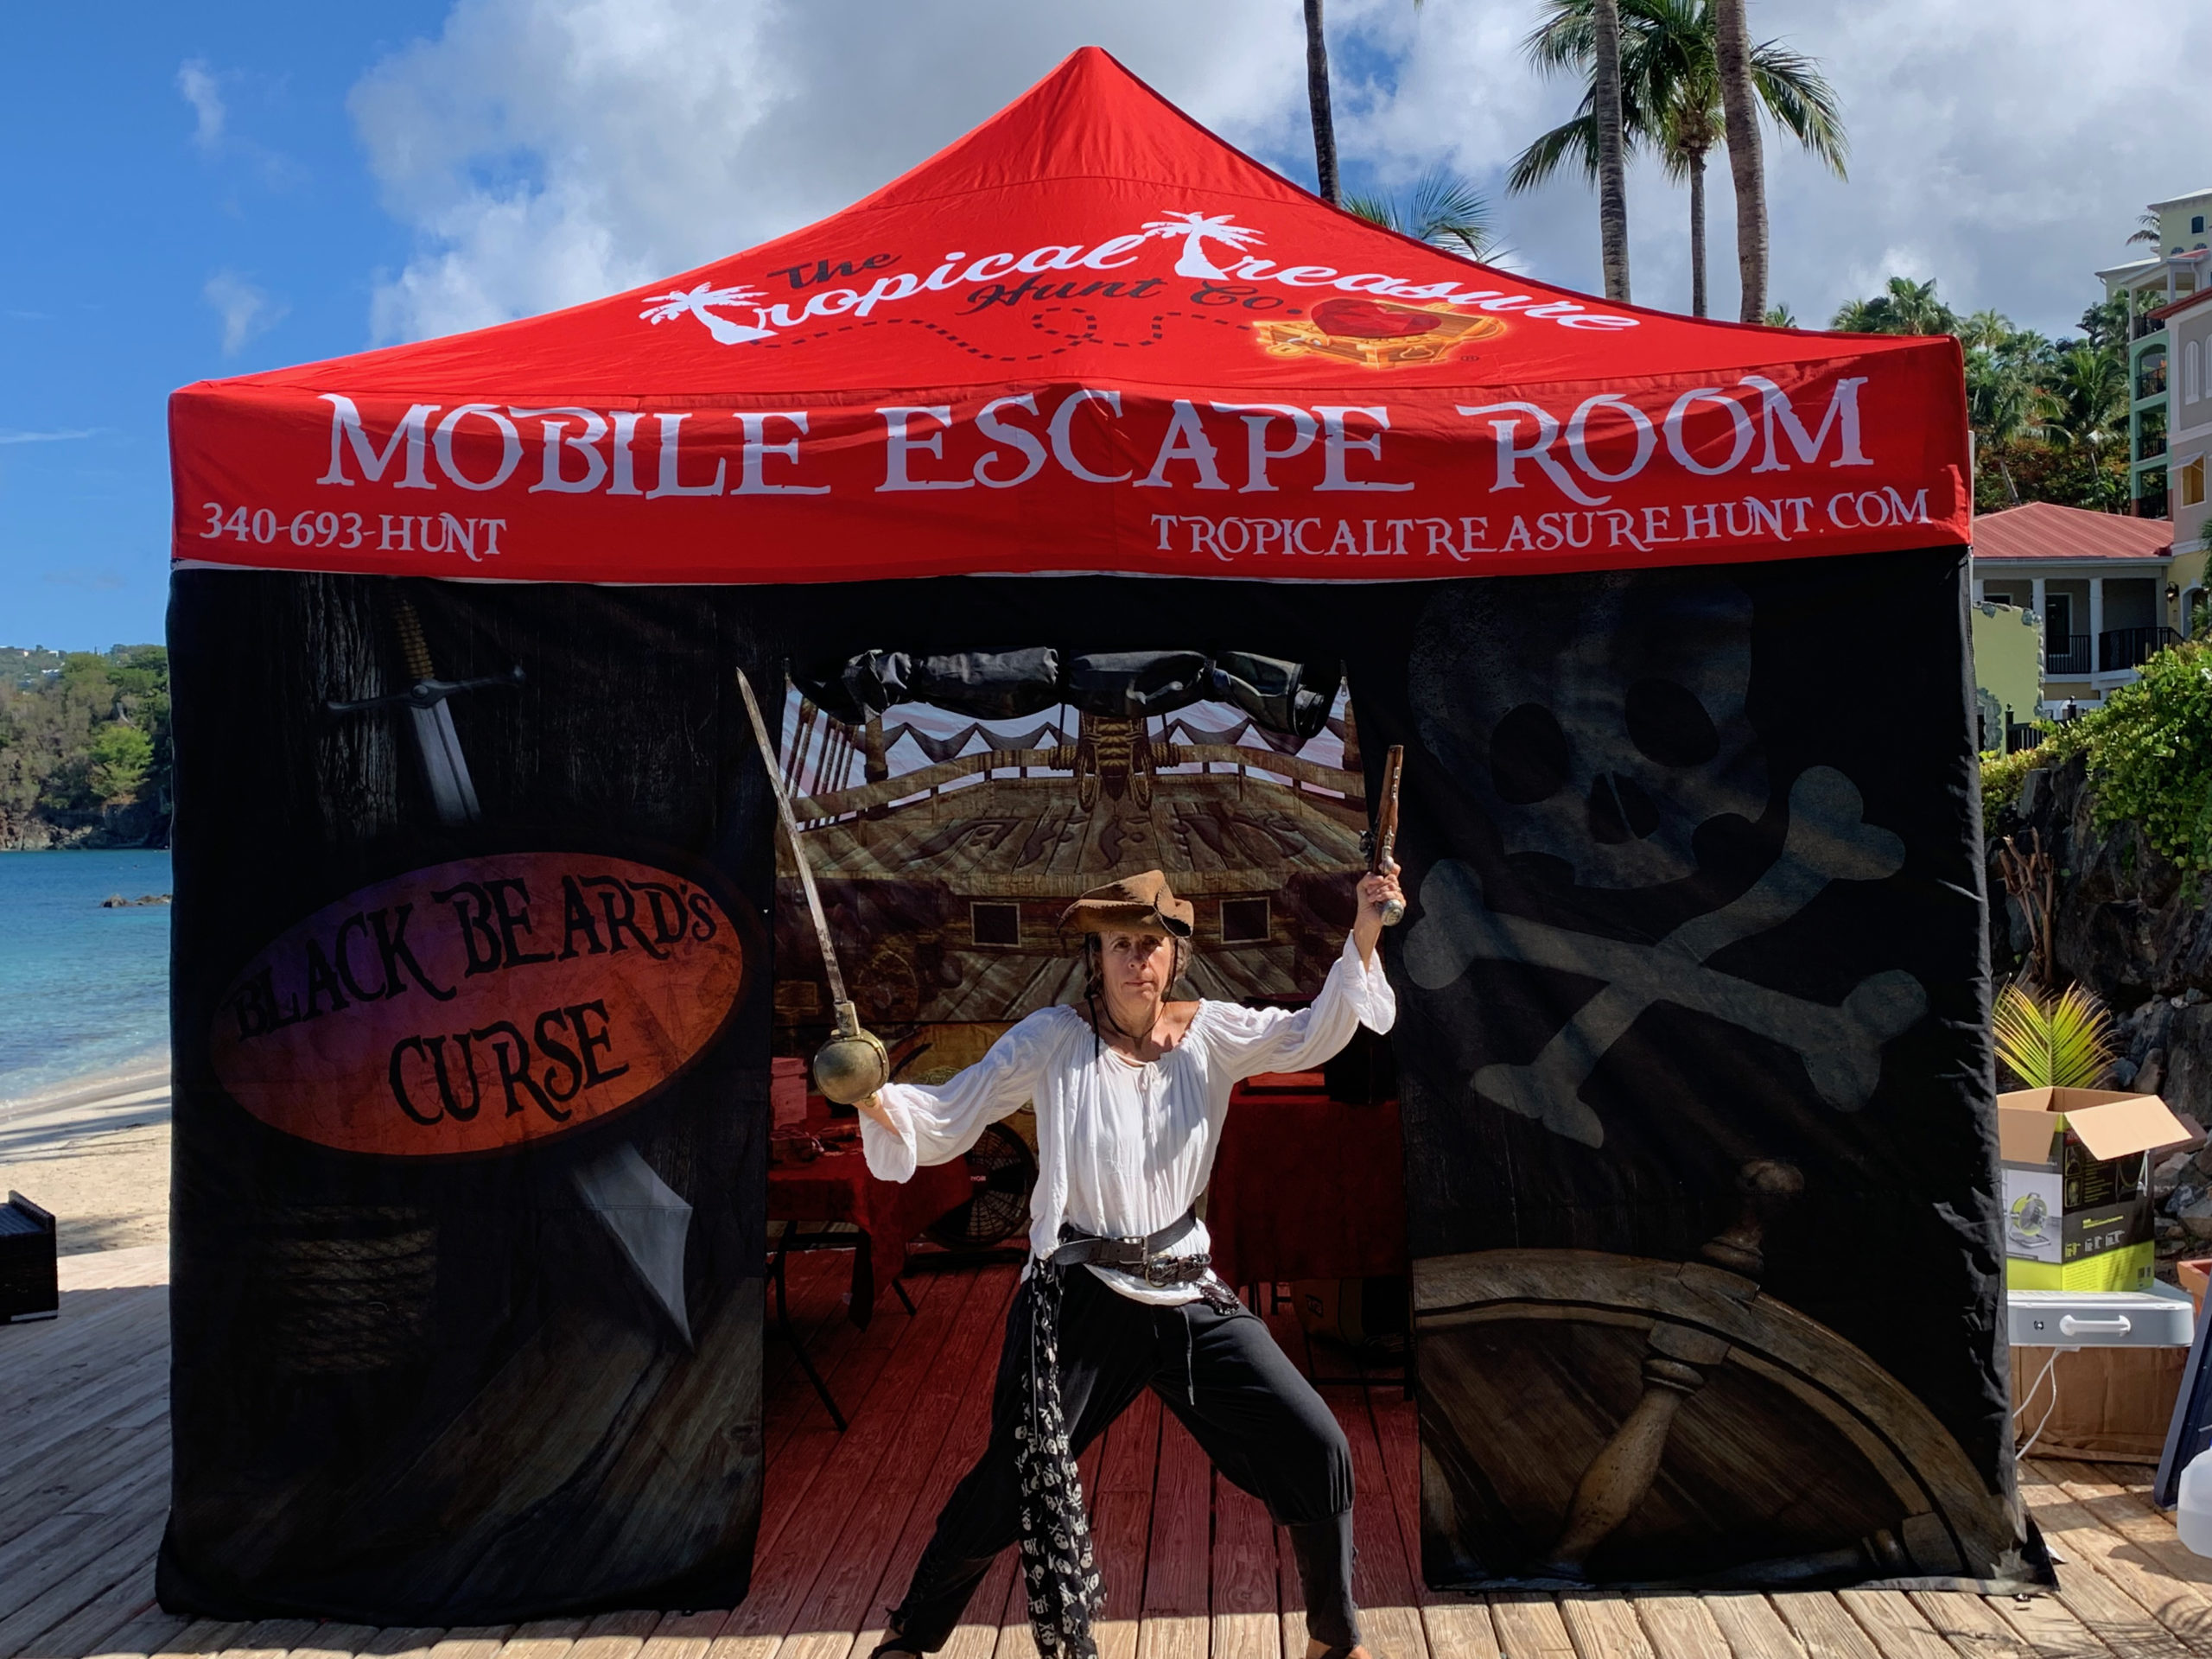 Anne Bonny poses outside the Mobile Escape Room